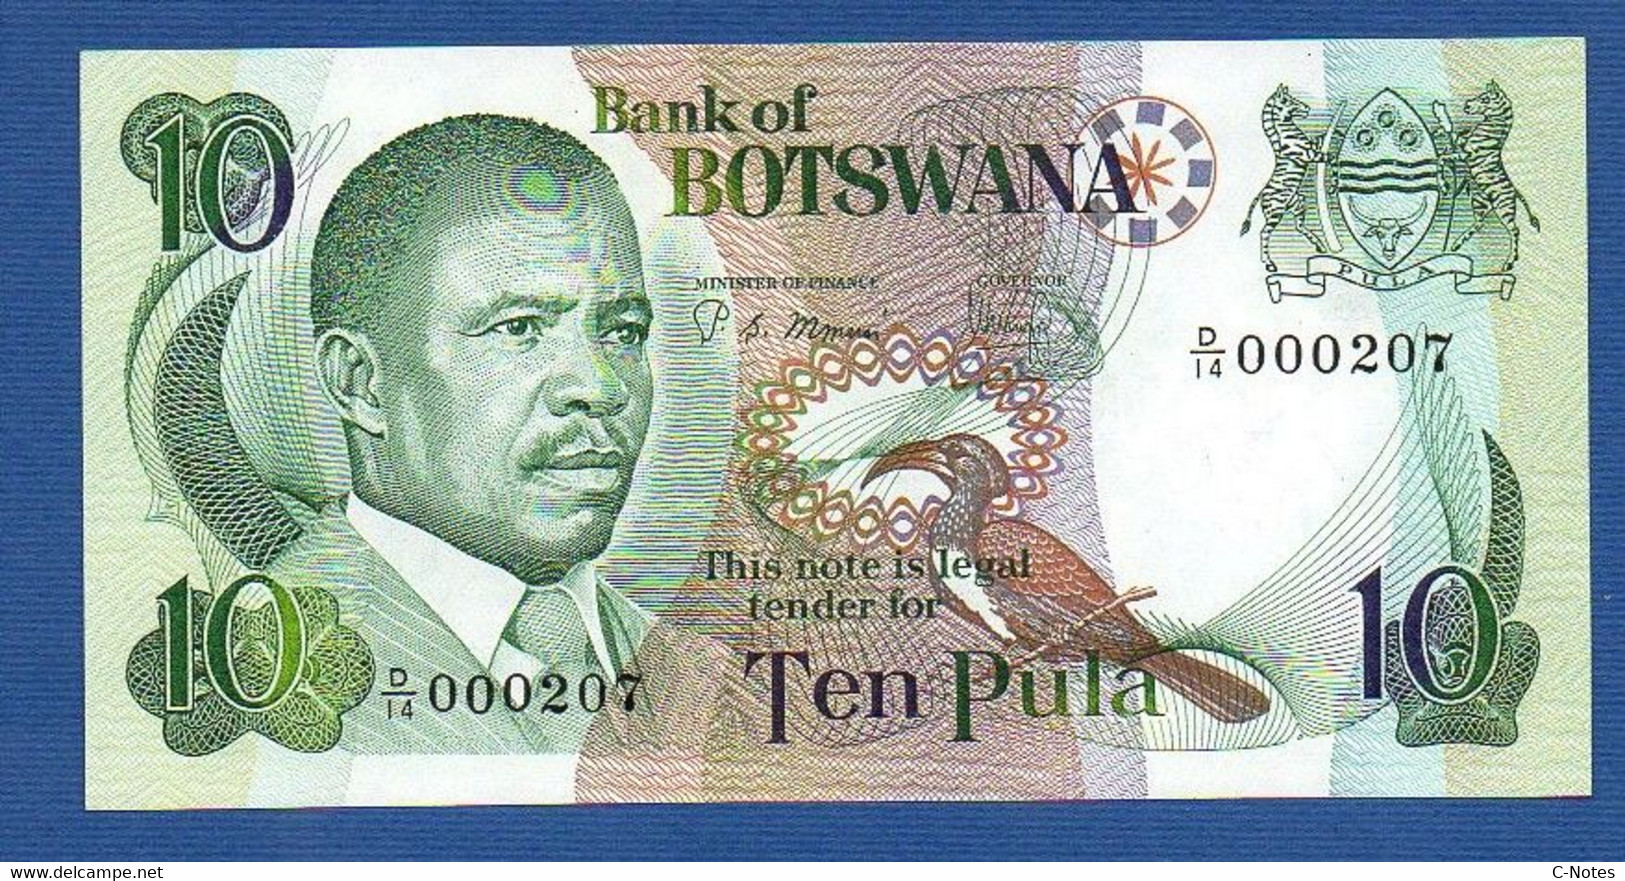 BOTSWANA - P. 9b – 10 PULA  ND (1982) UNC, Prefix D/14 000207 Low Serial Number - Botswana